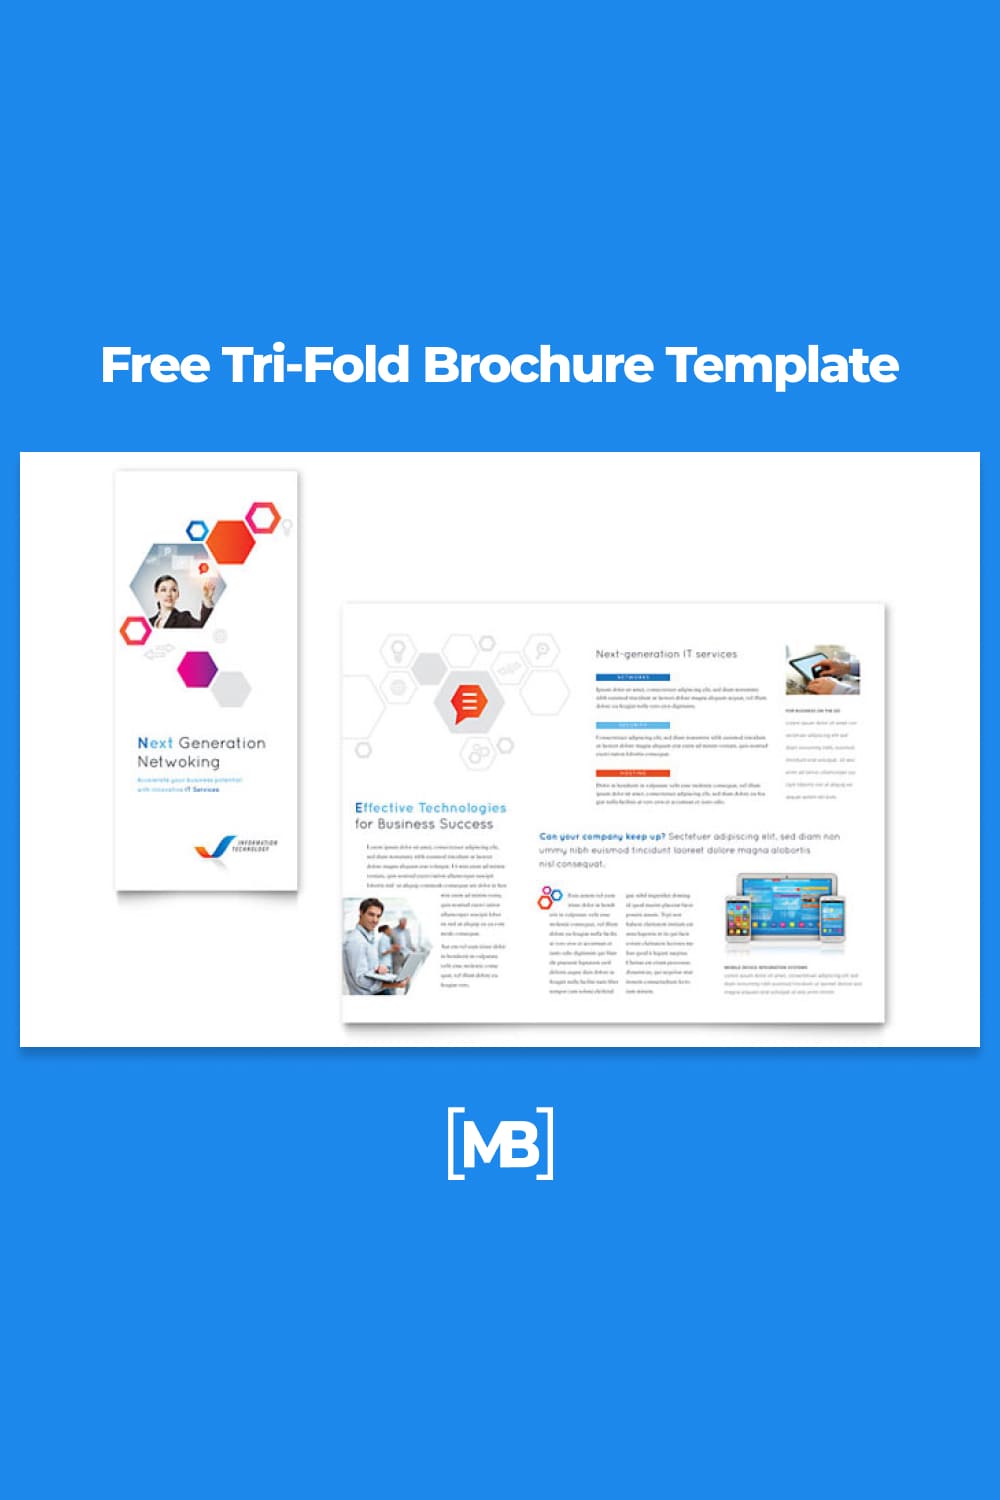 Tri-Fold brochure template in a free access.